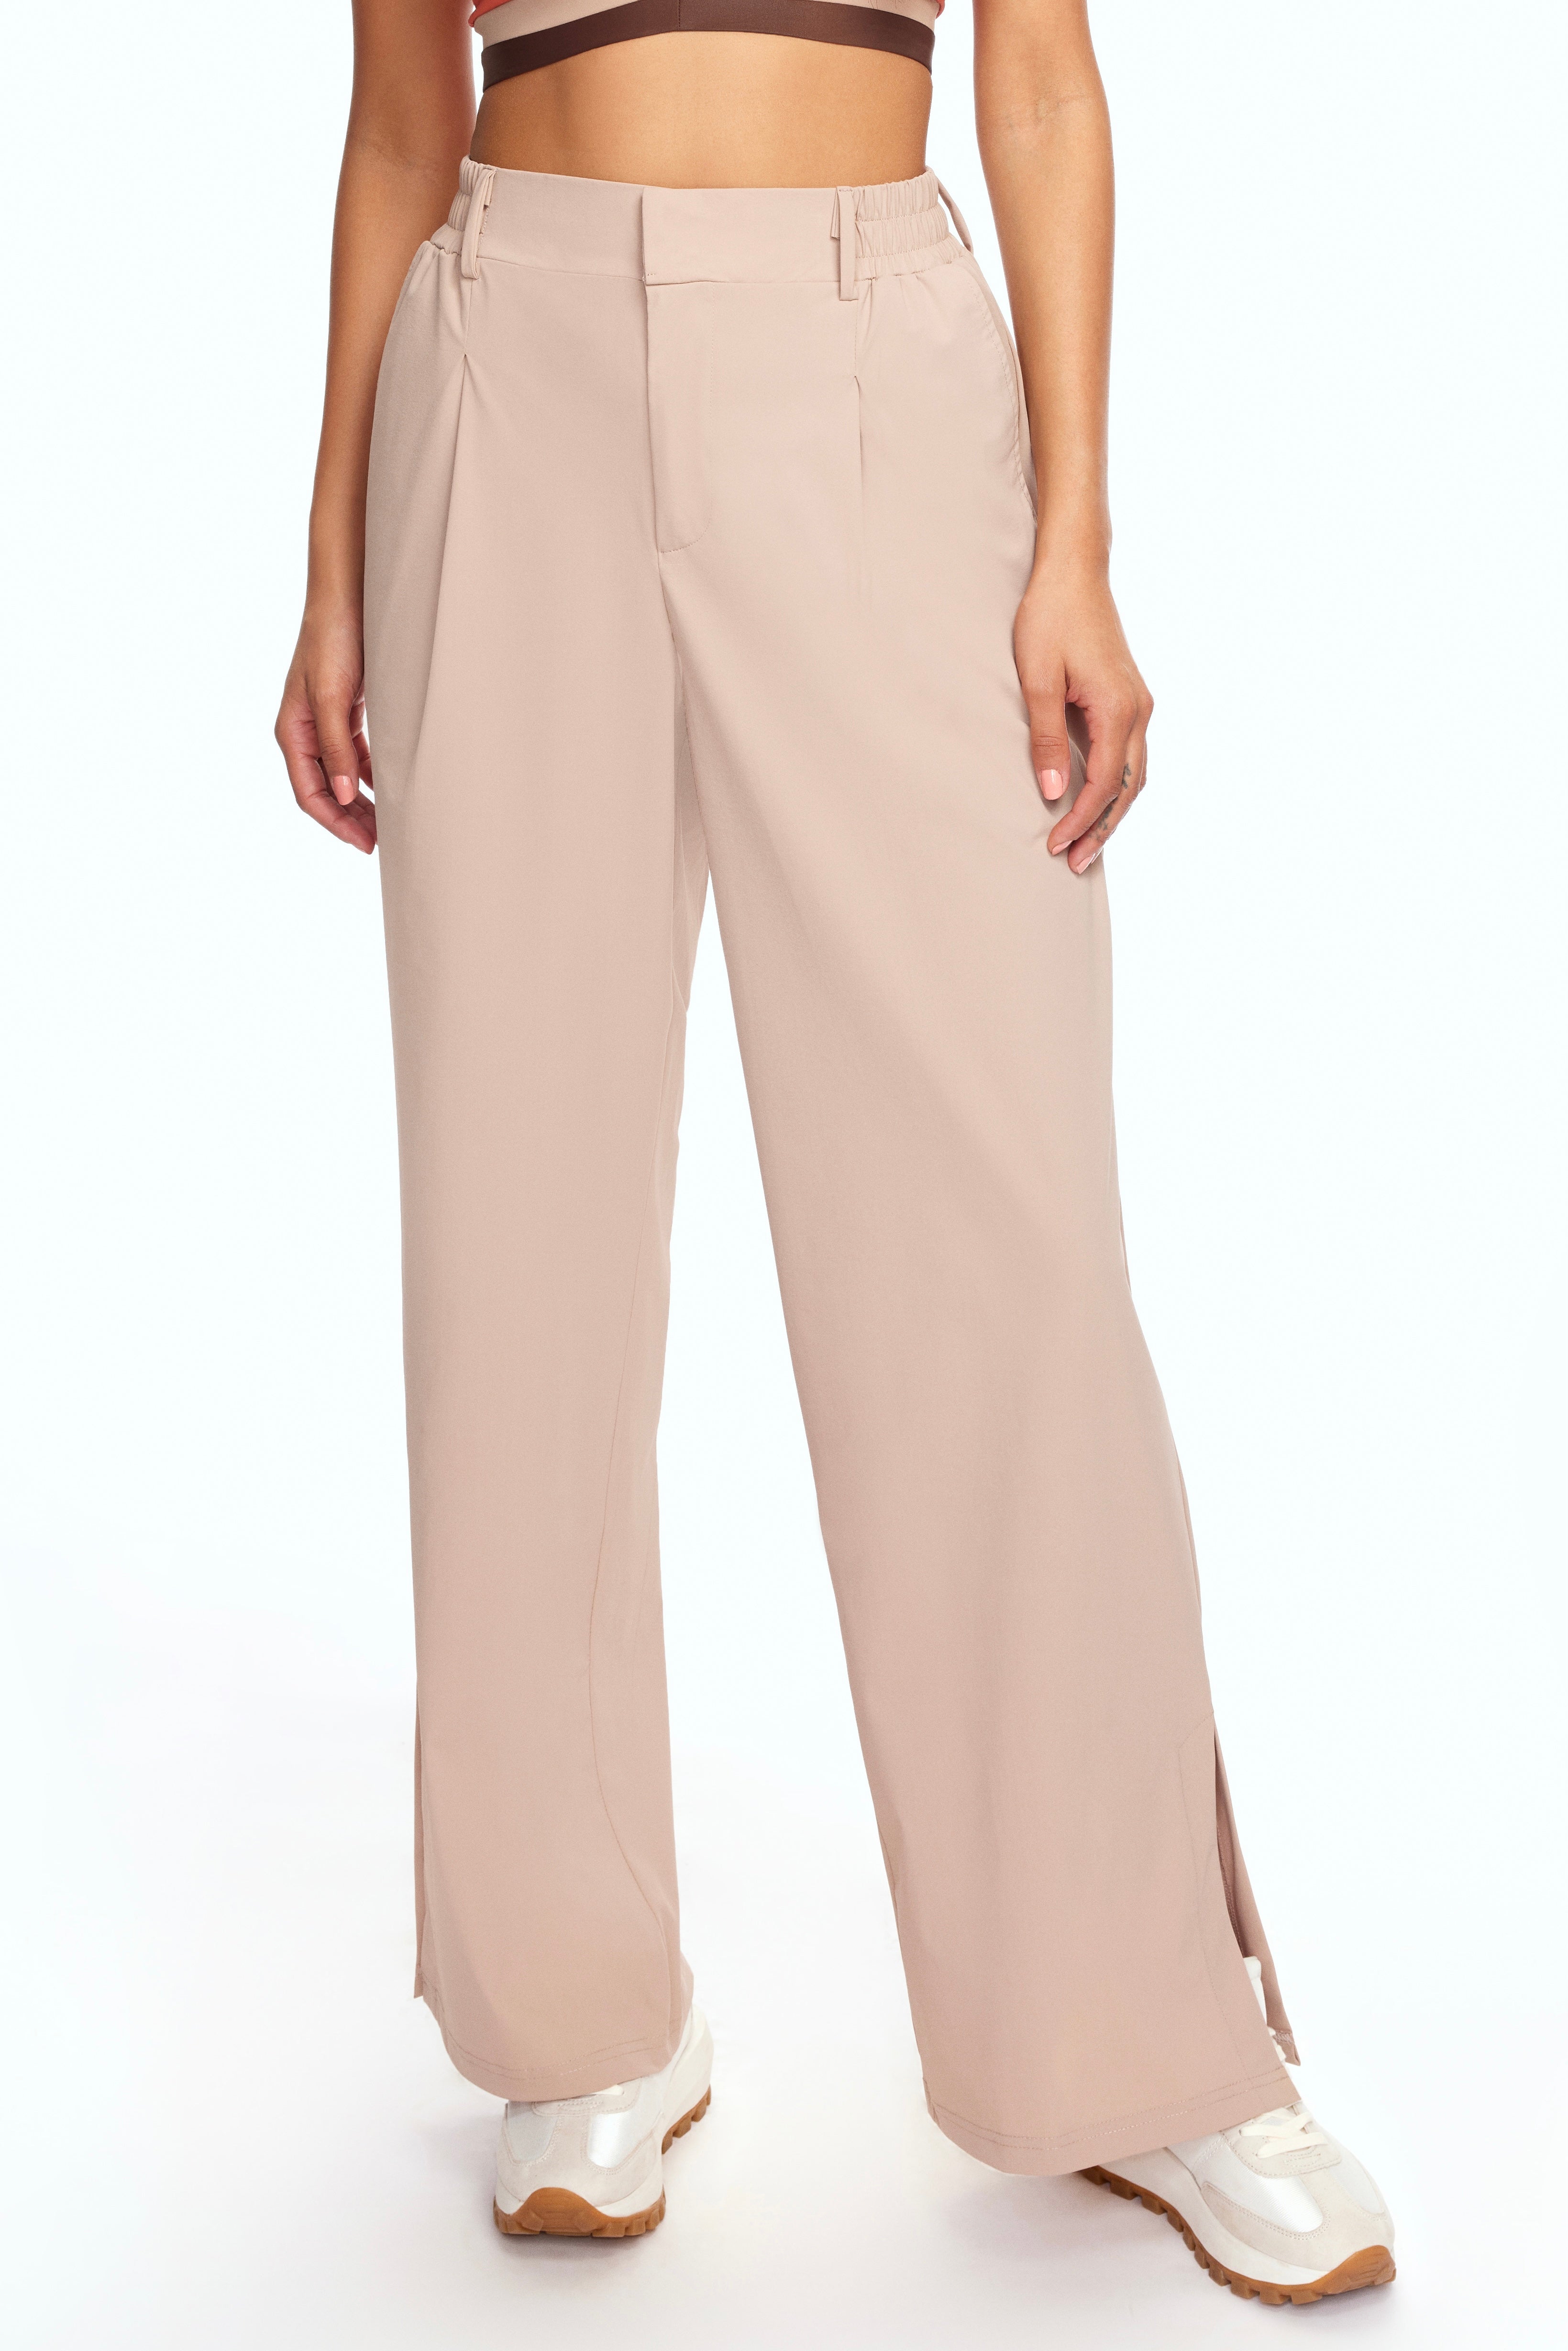 TOPSHOP WOMEN'S TWO Piece Suit UK 8 Pink 100% Polyester Trouser Suit £34.00  - PicClick UK